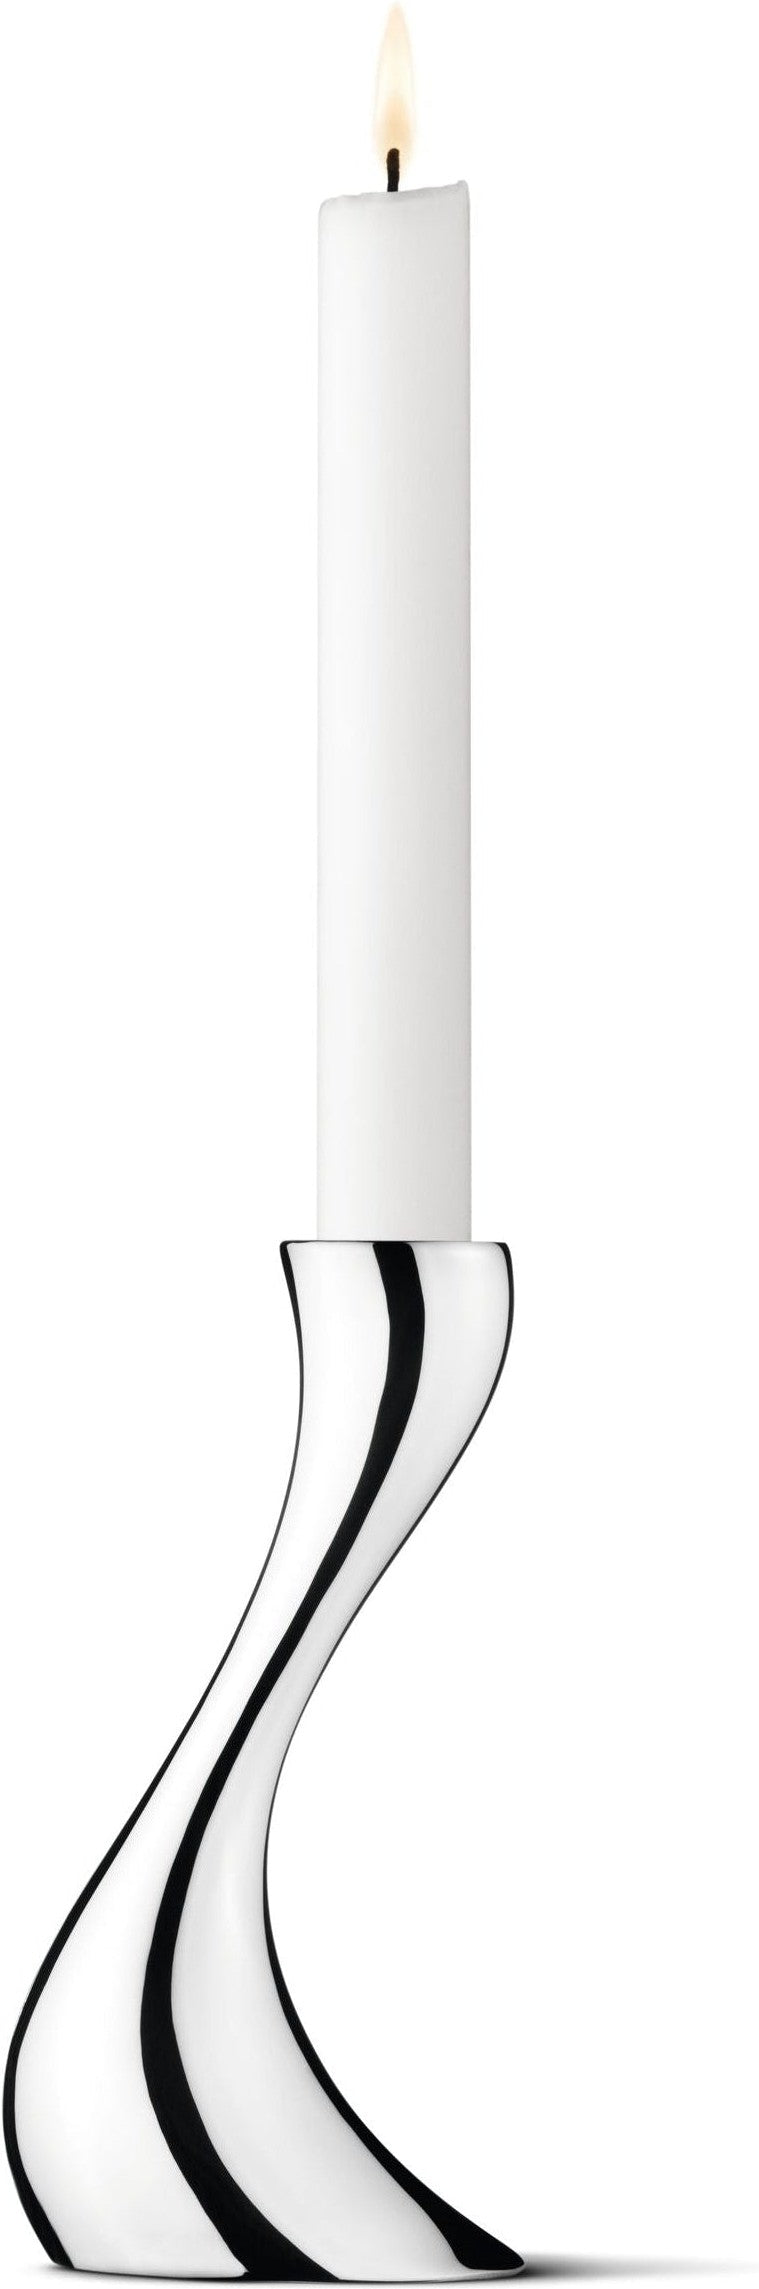 Georg Jensen Cobra Candle Holder rustfrit stål, 16 cm